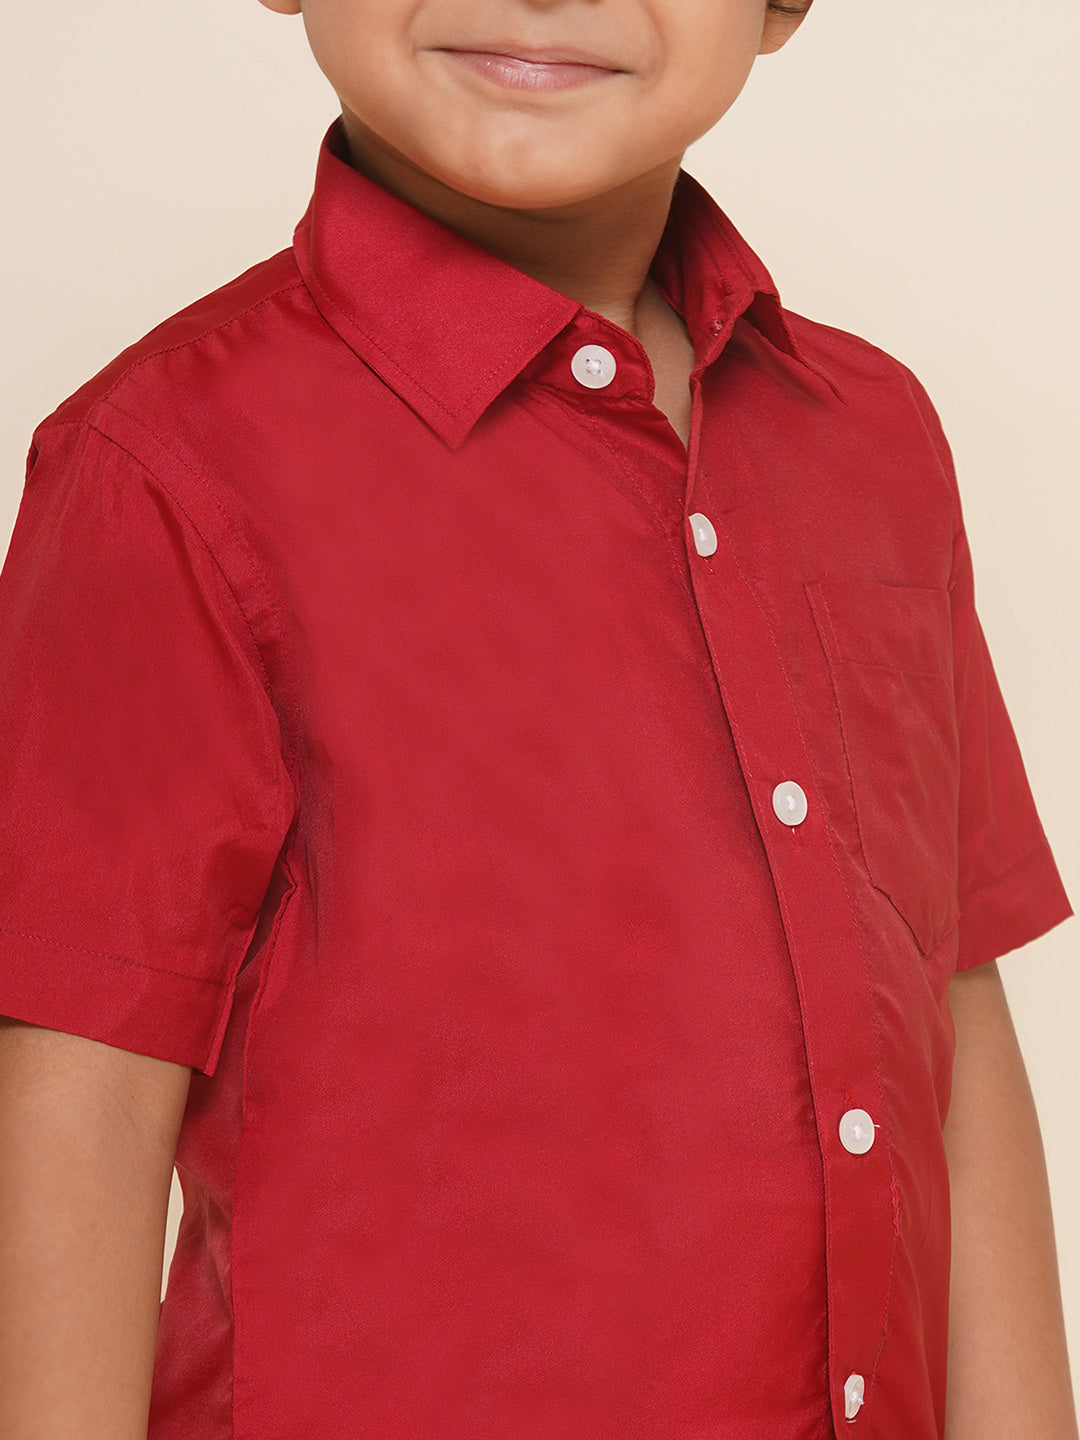 Boys Maroon Colour Polyester Shirt